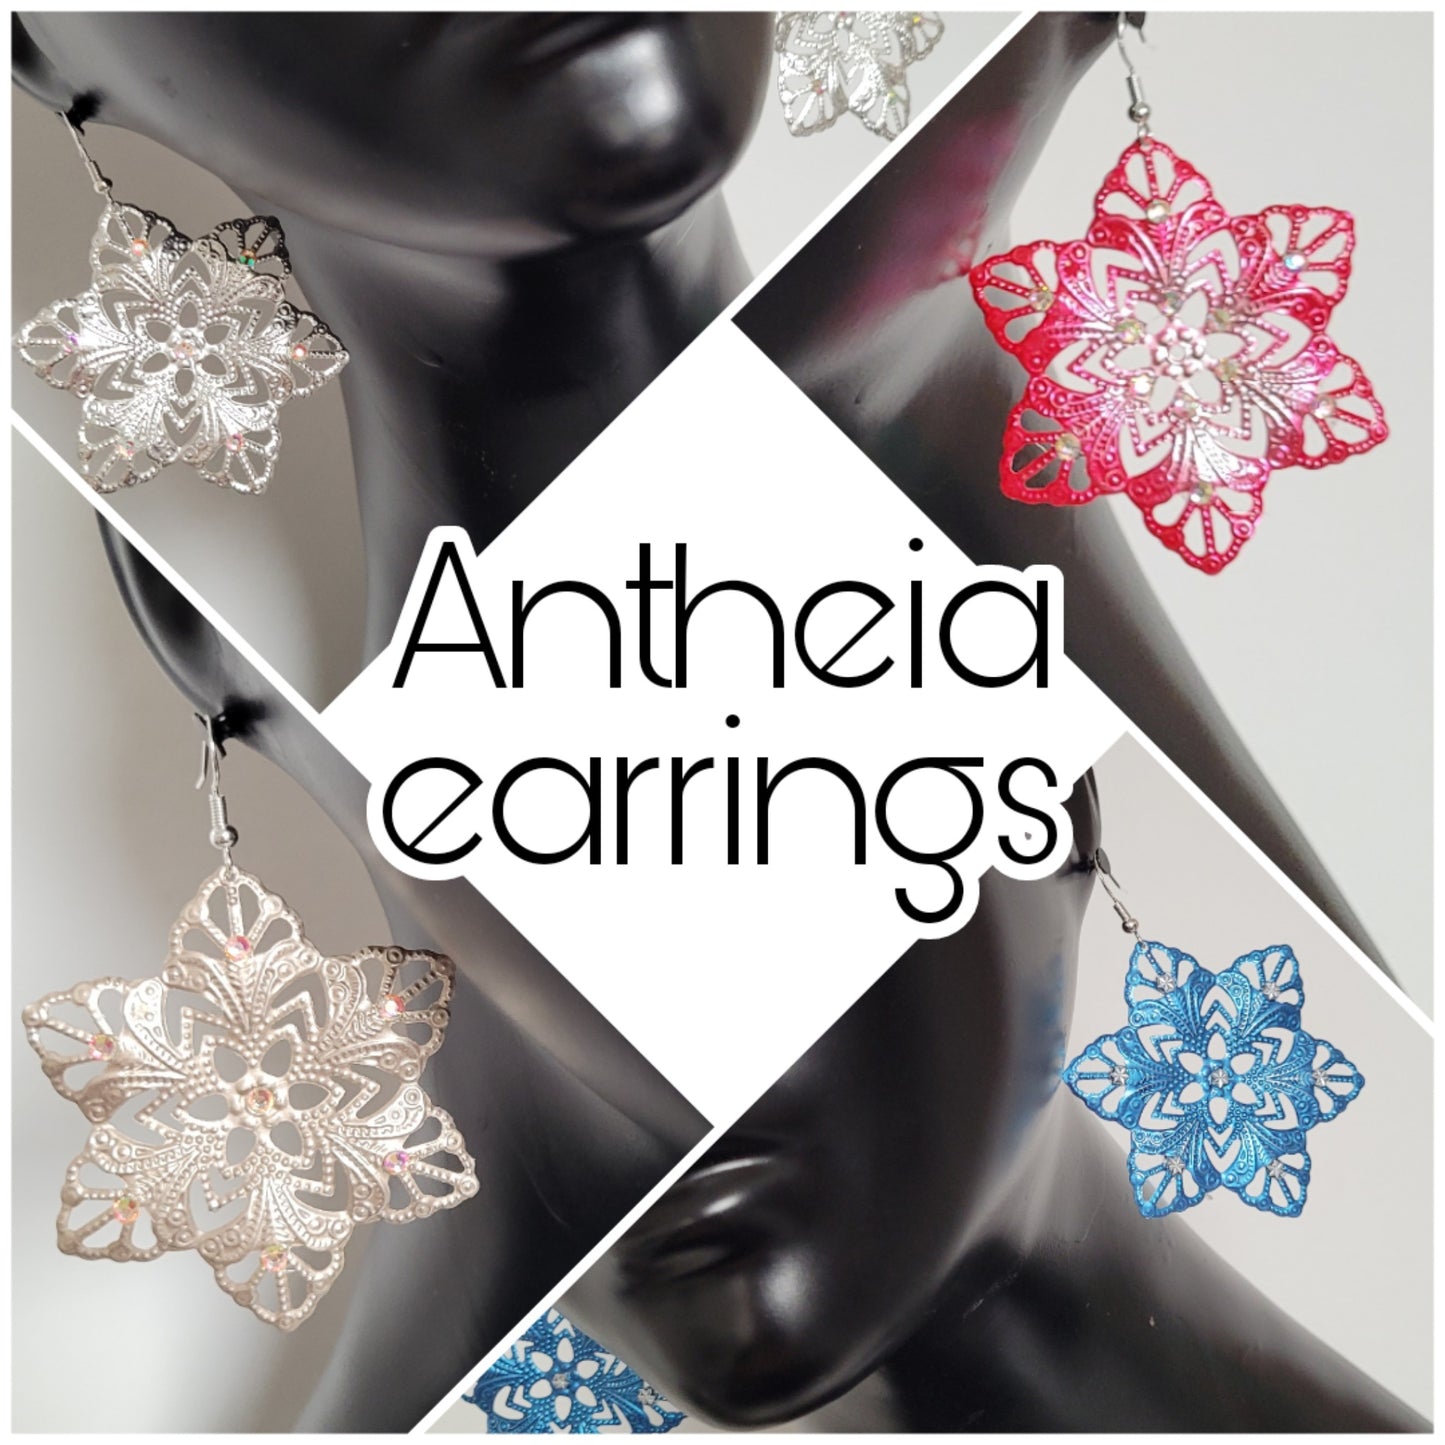 Deusa ex Machina collection: The Antheia earrings